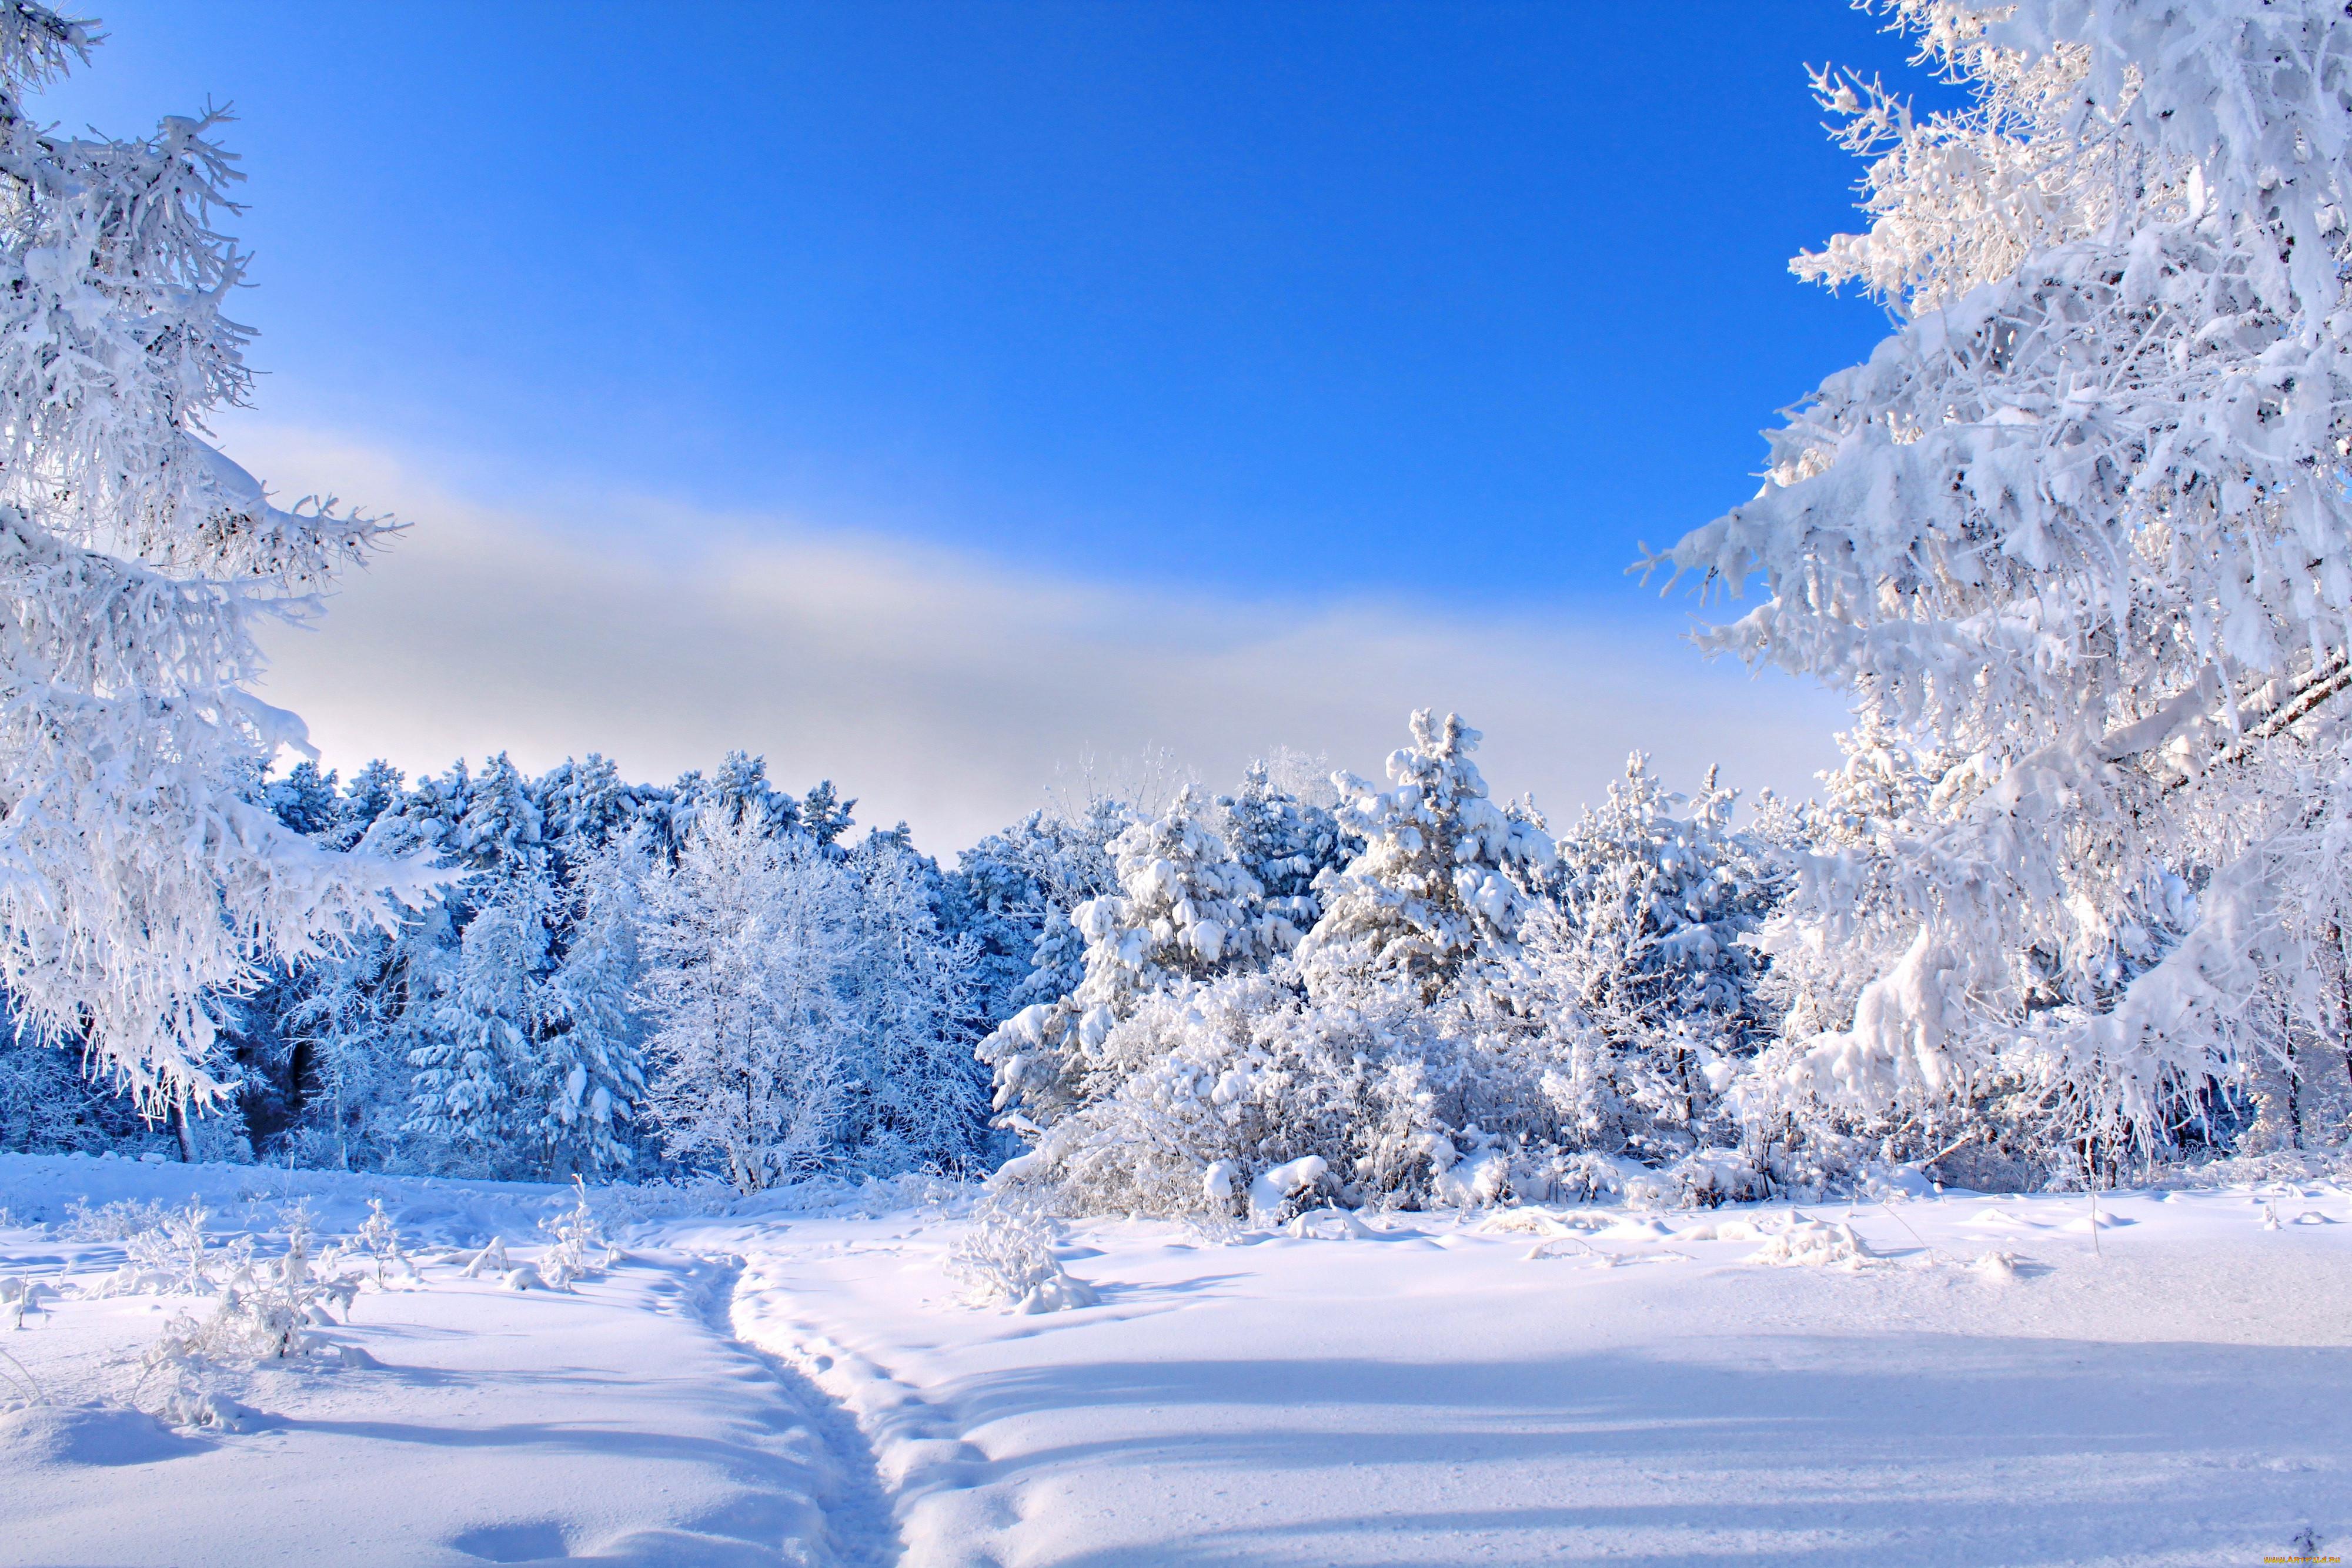 Картинки на рабочий стол природа зима фотографии